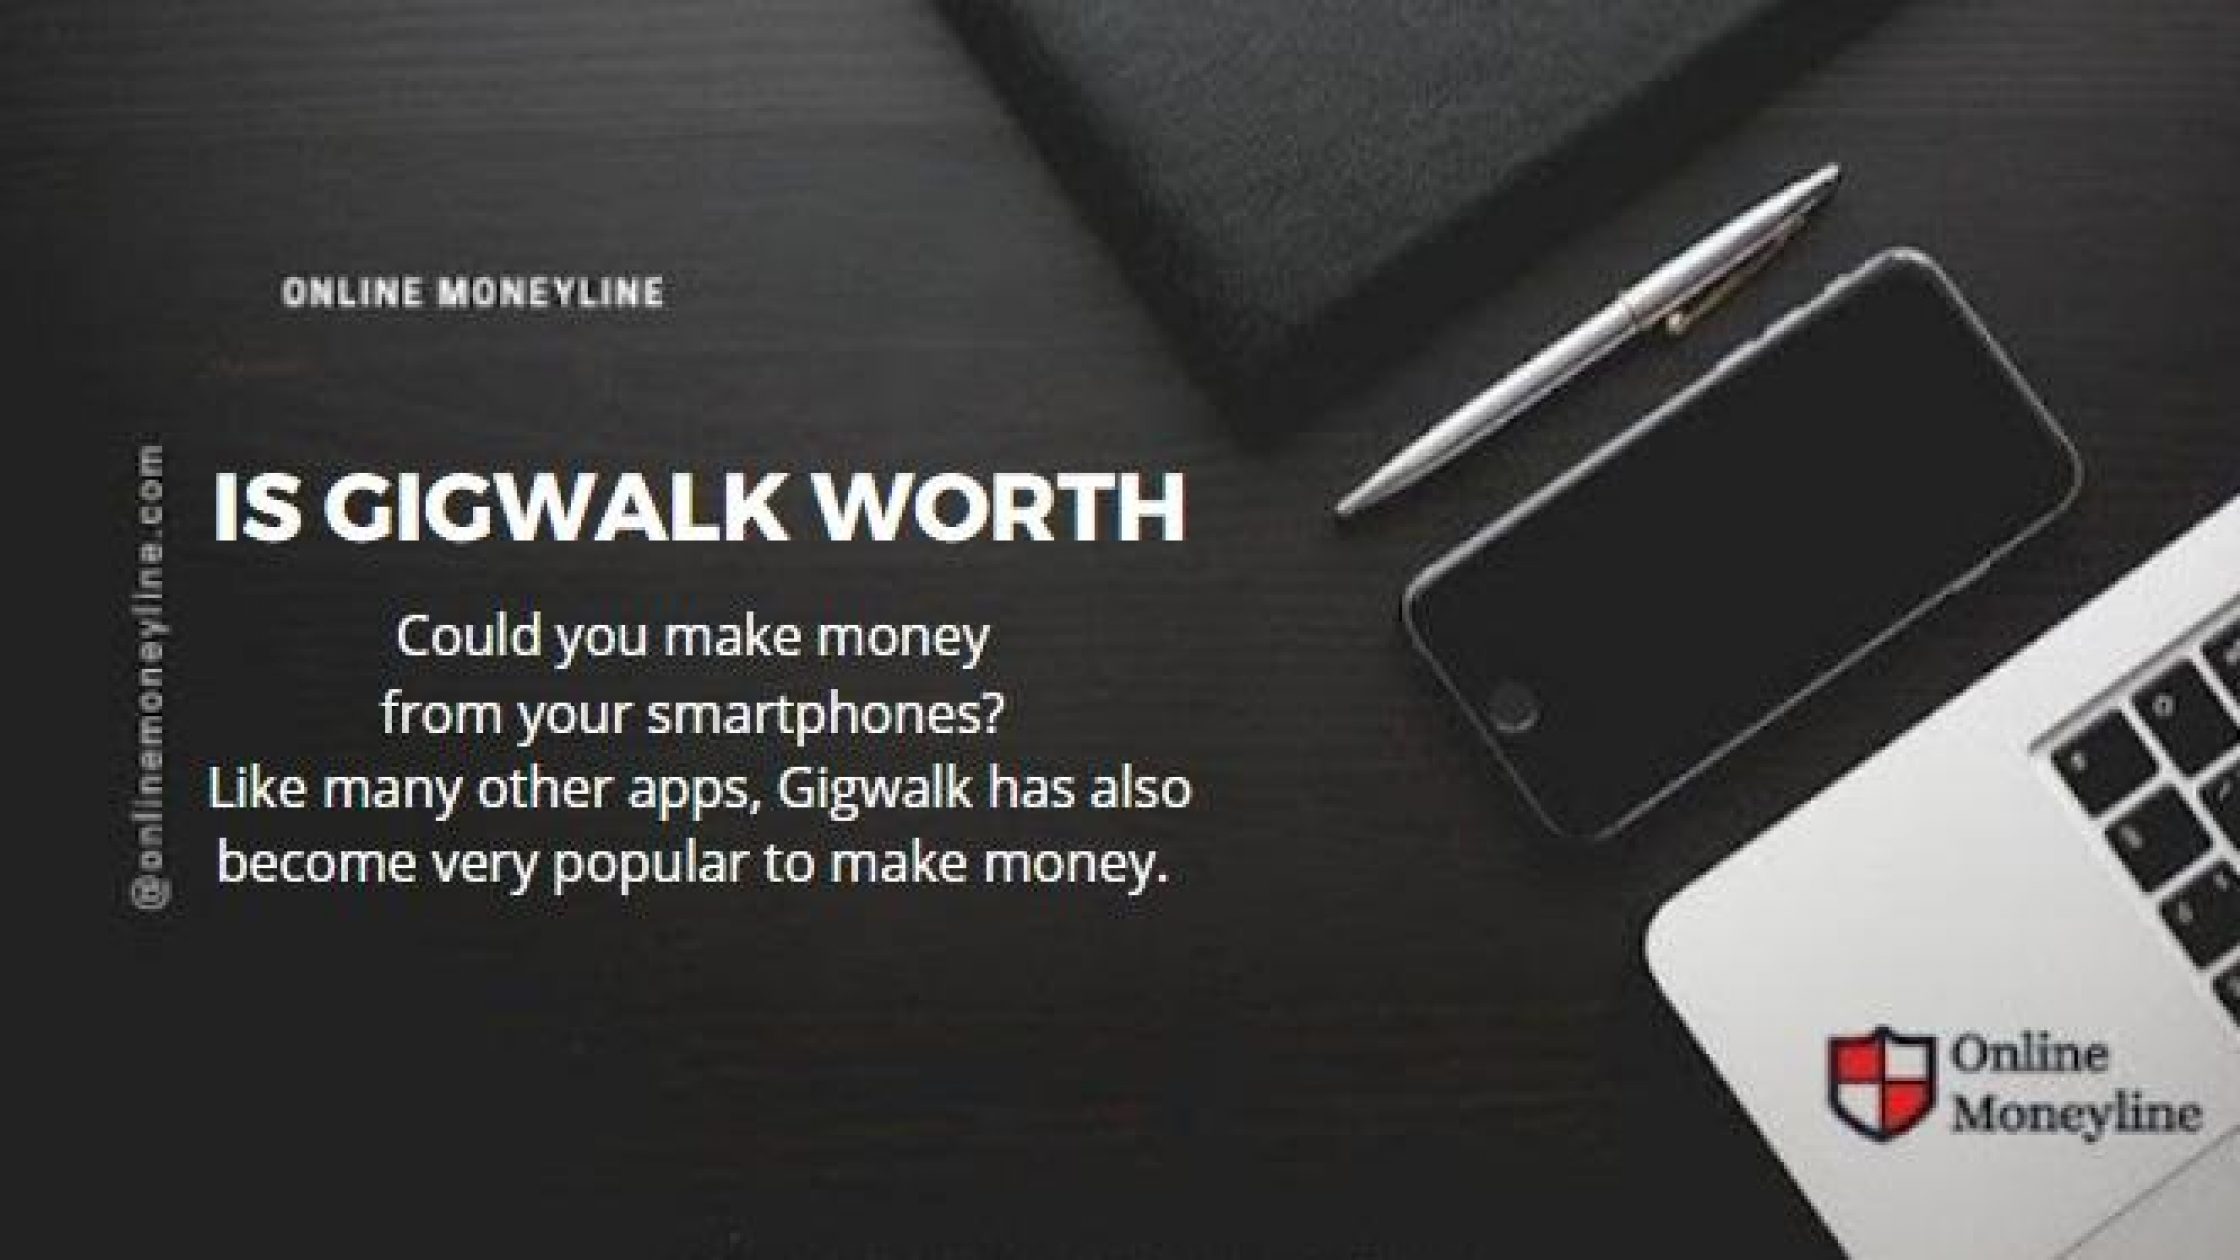 Gigwalk Review: Is Gigwalk Worth It?